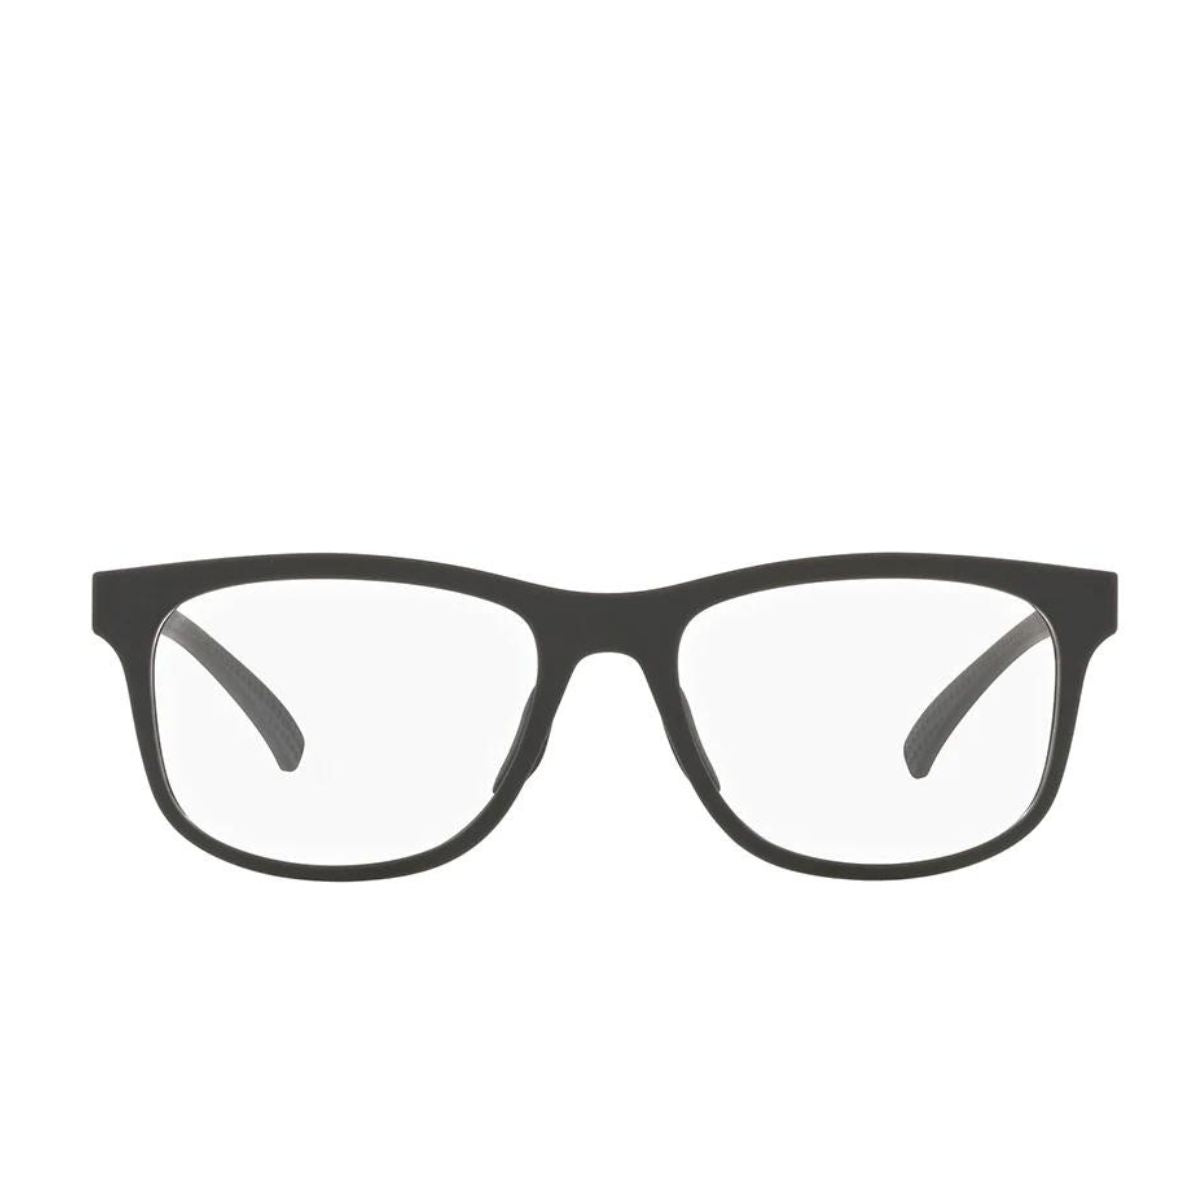 "buy Oakley 8175 0452 prescription glasses frame for men's online at optorium"